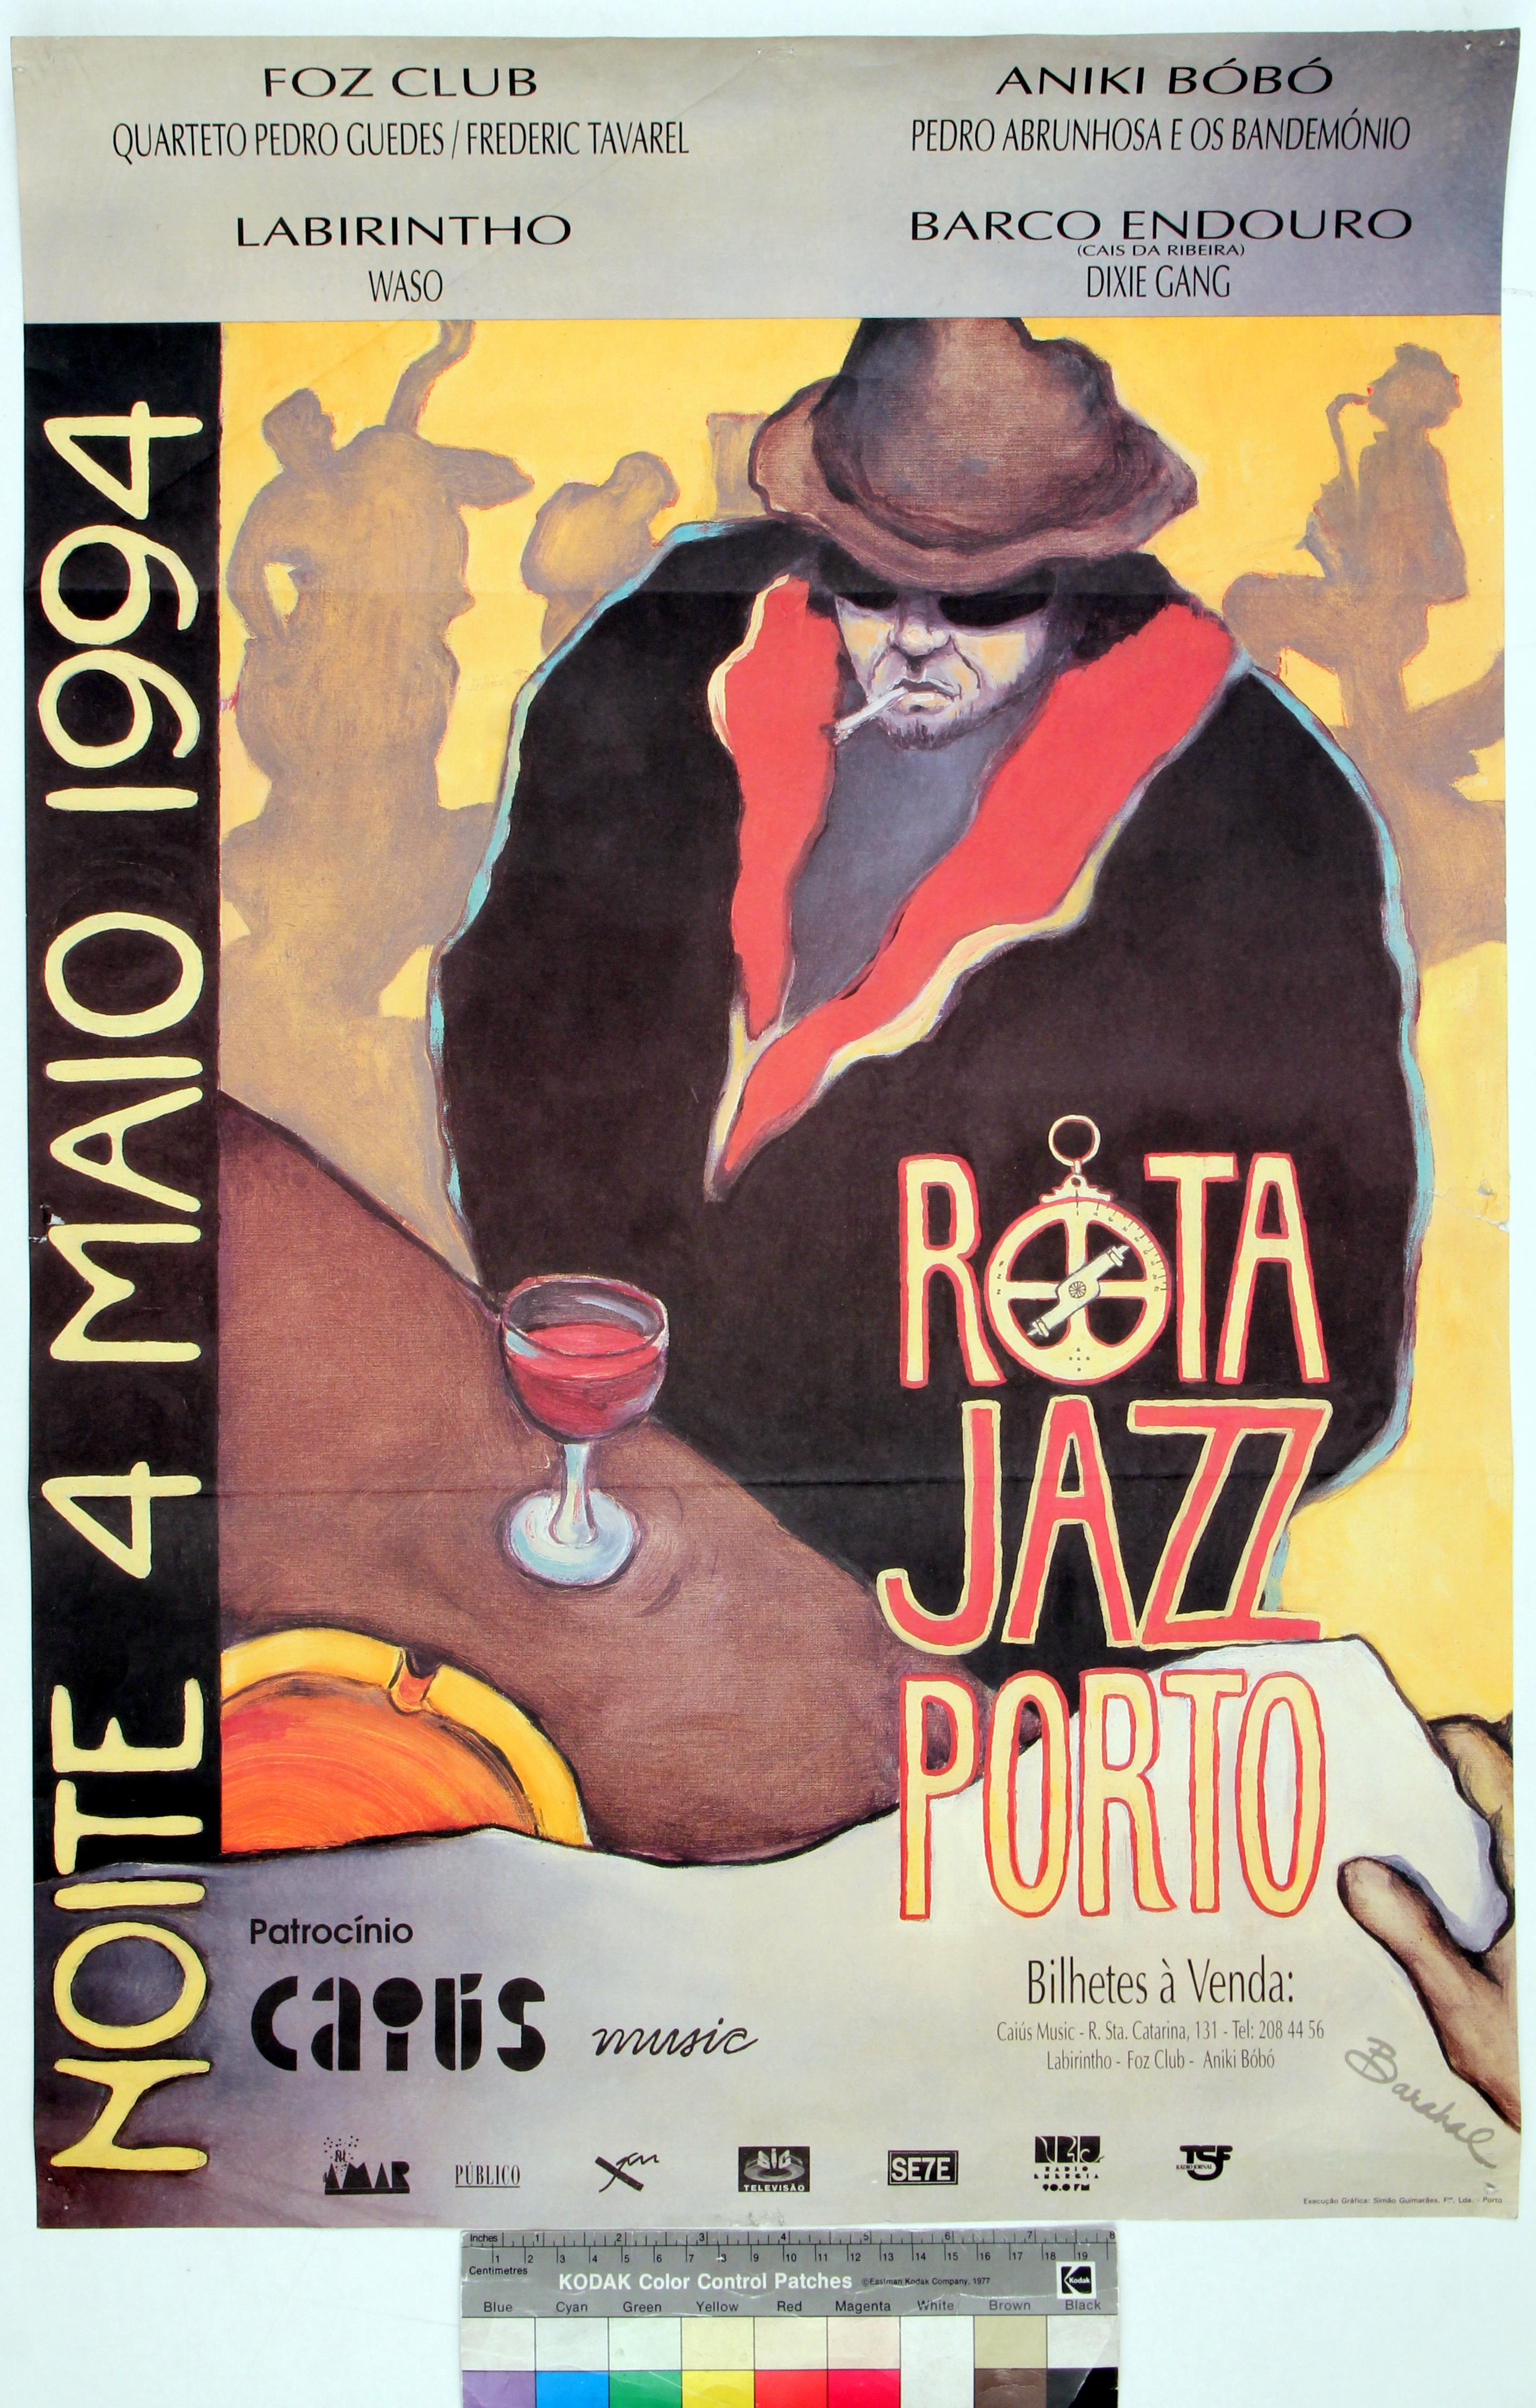 Rota Jazz Porto